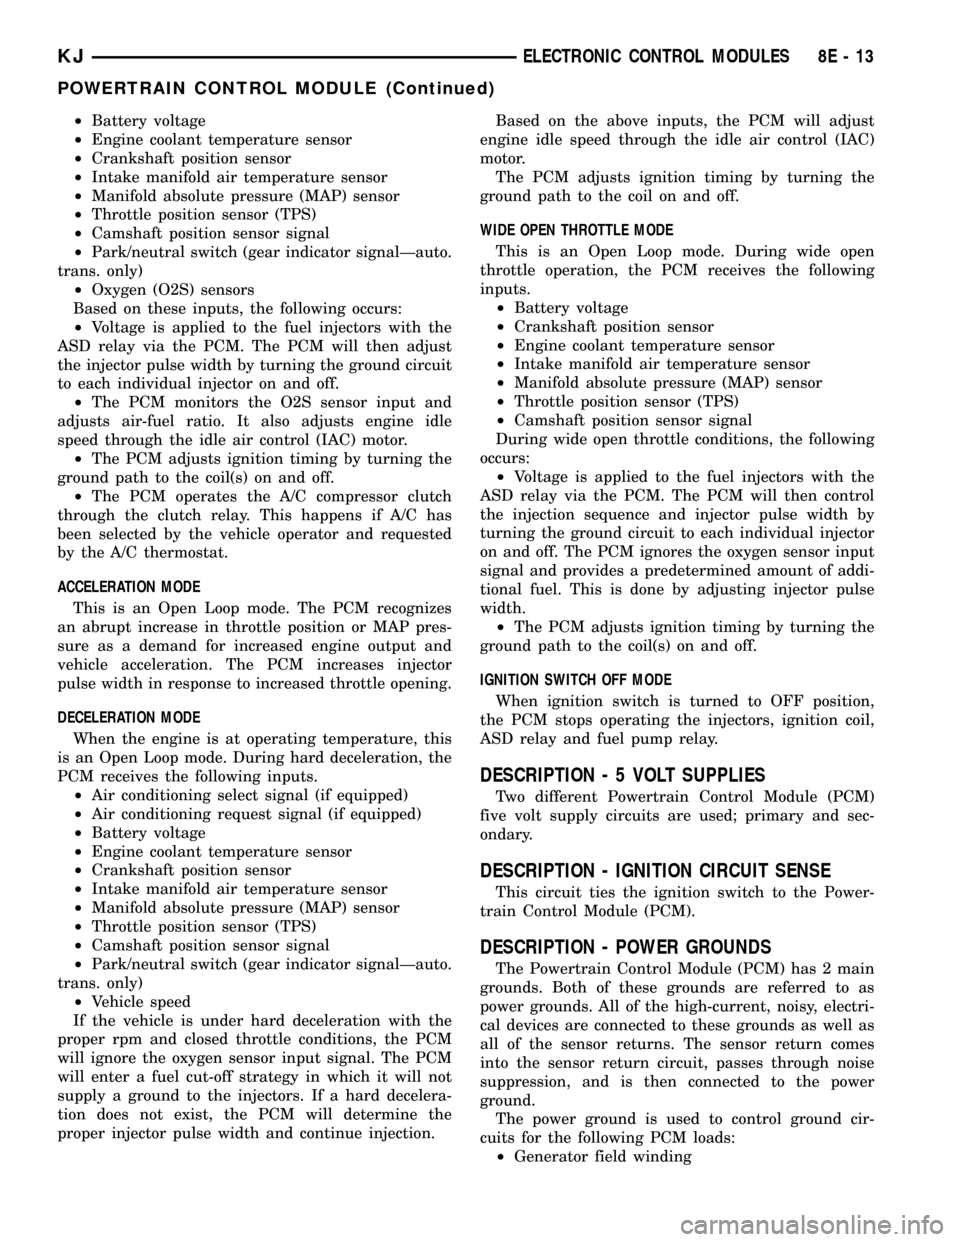 JEEP LIBERTY 2002 KJ / 1.G Workshop Manual ²Battery voltage
²Engine coolant temperature sensor
²Crankshaft position sensor
²Intake manifold air temperature sensor
²Manifold absolute pressure (MAP) sensor
²Throttle position sensor (TPS)
�